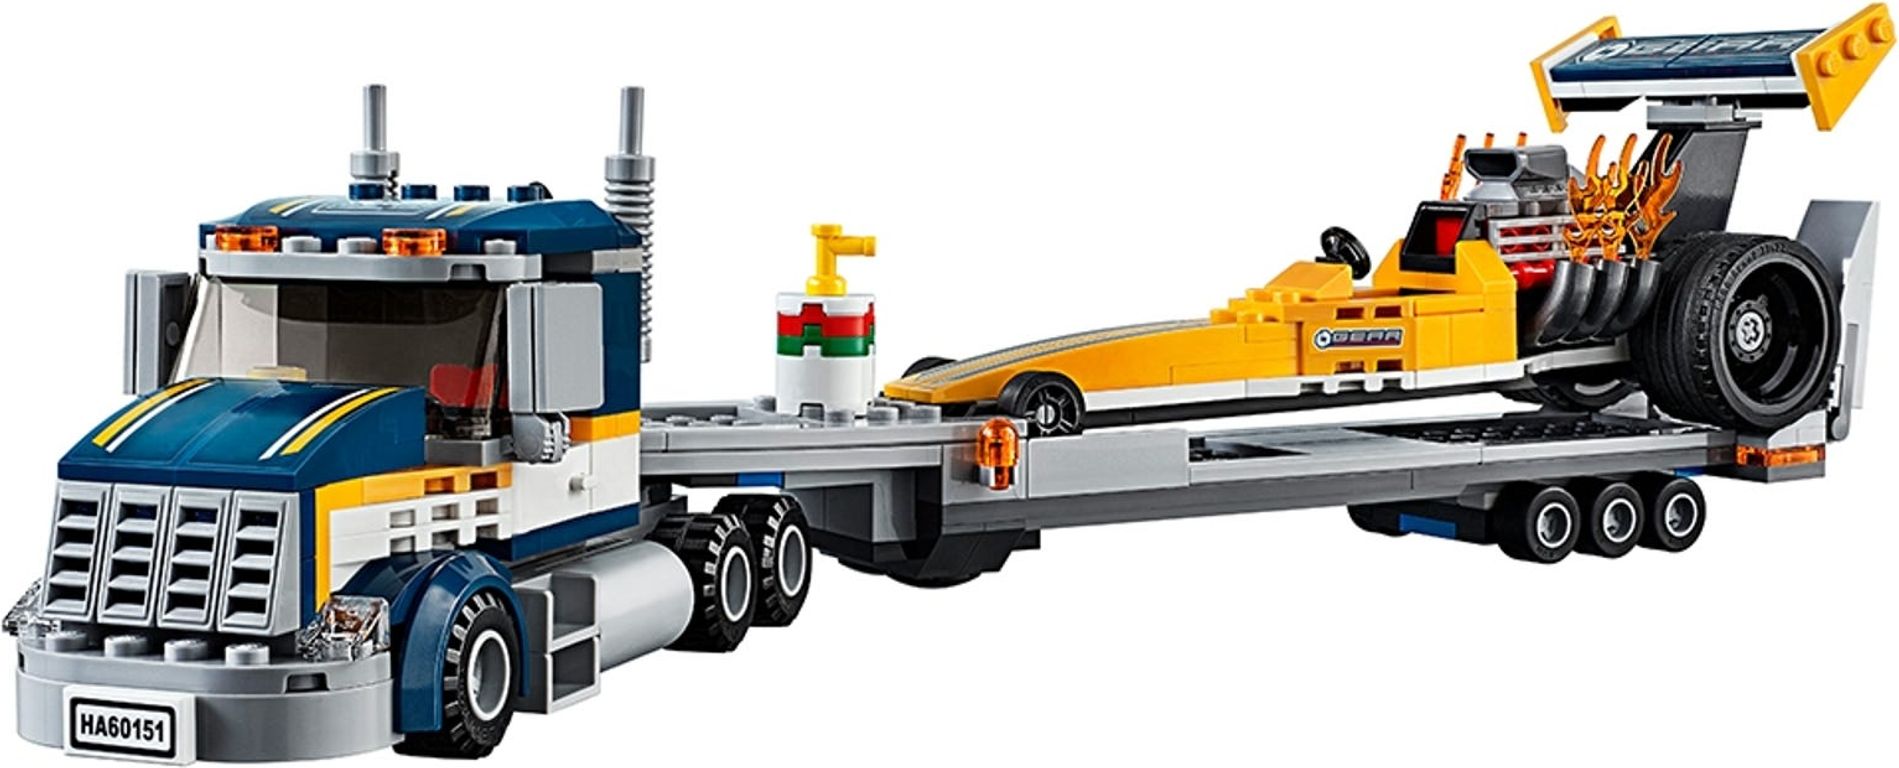 LEGO® City Dragster Transporter vehicle